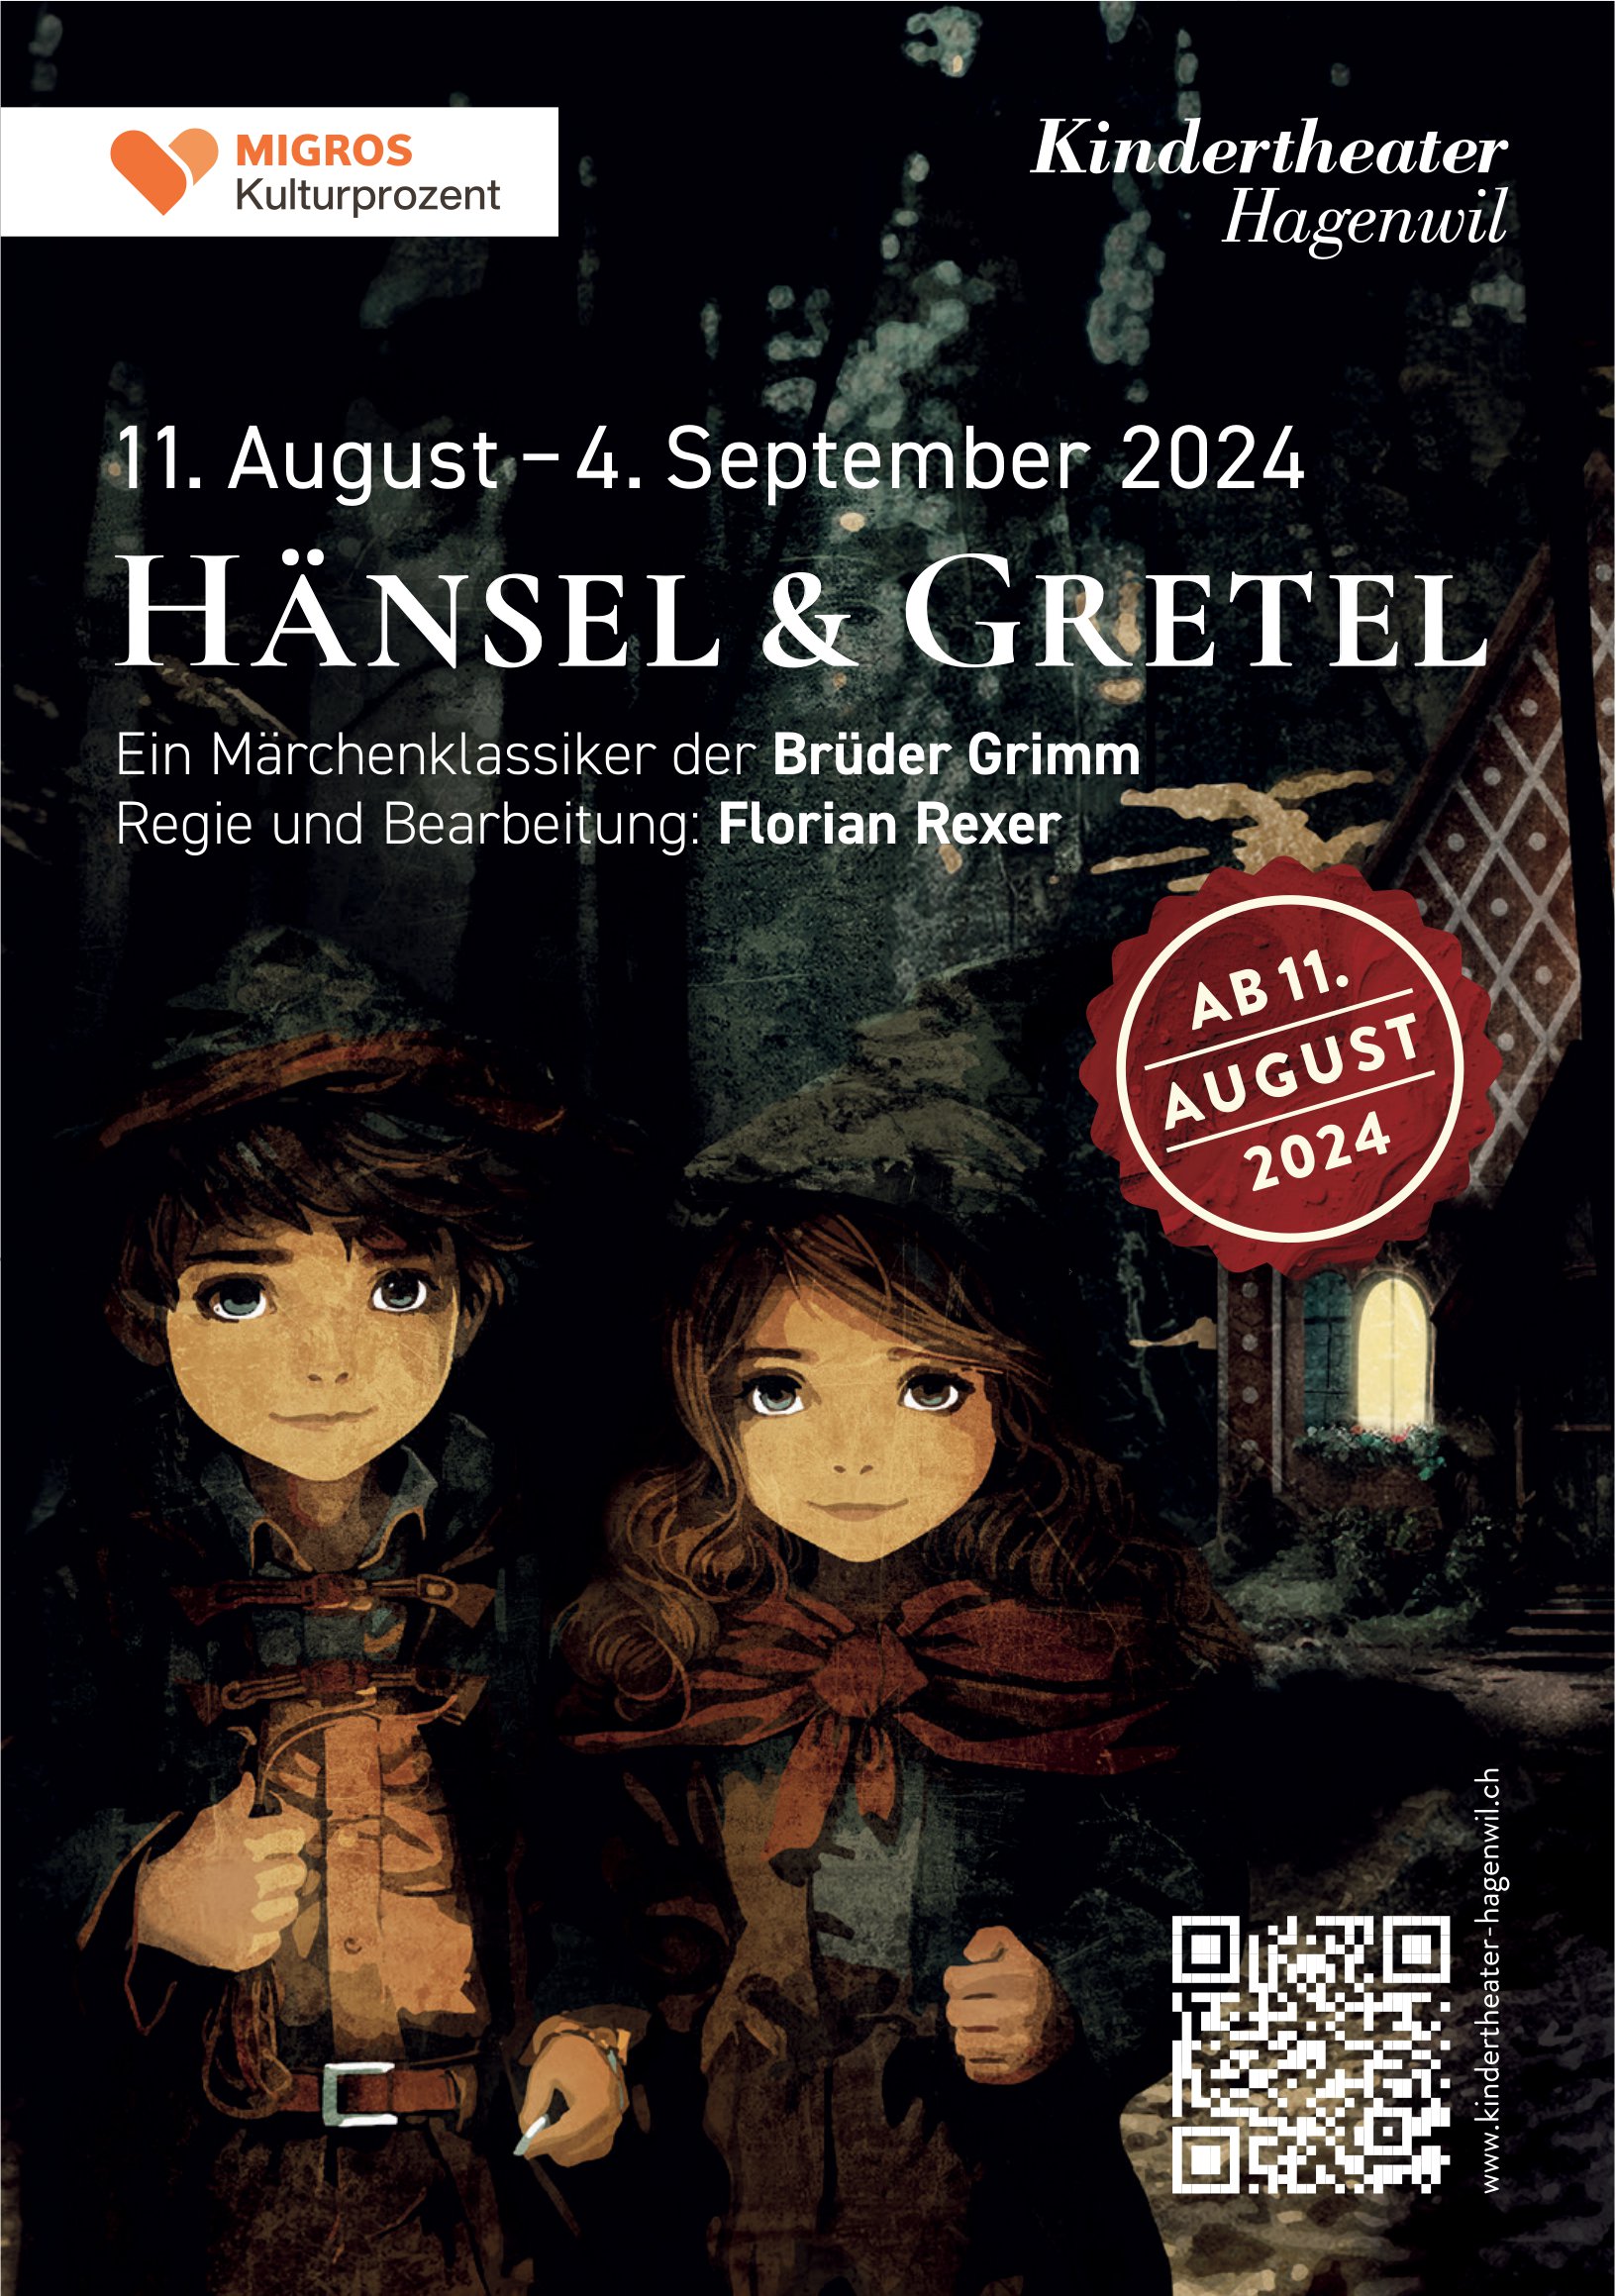 HÄNSEL & GRETEL, 11. August -4. September 2024